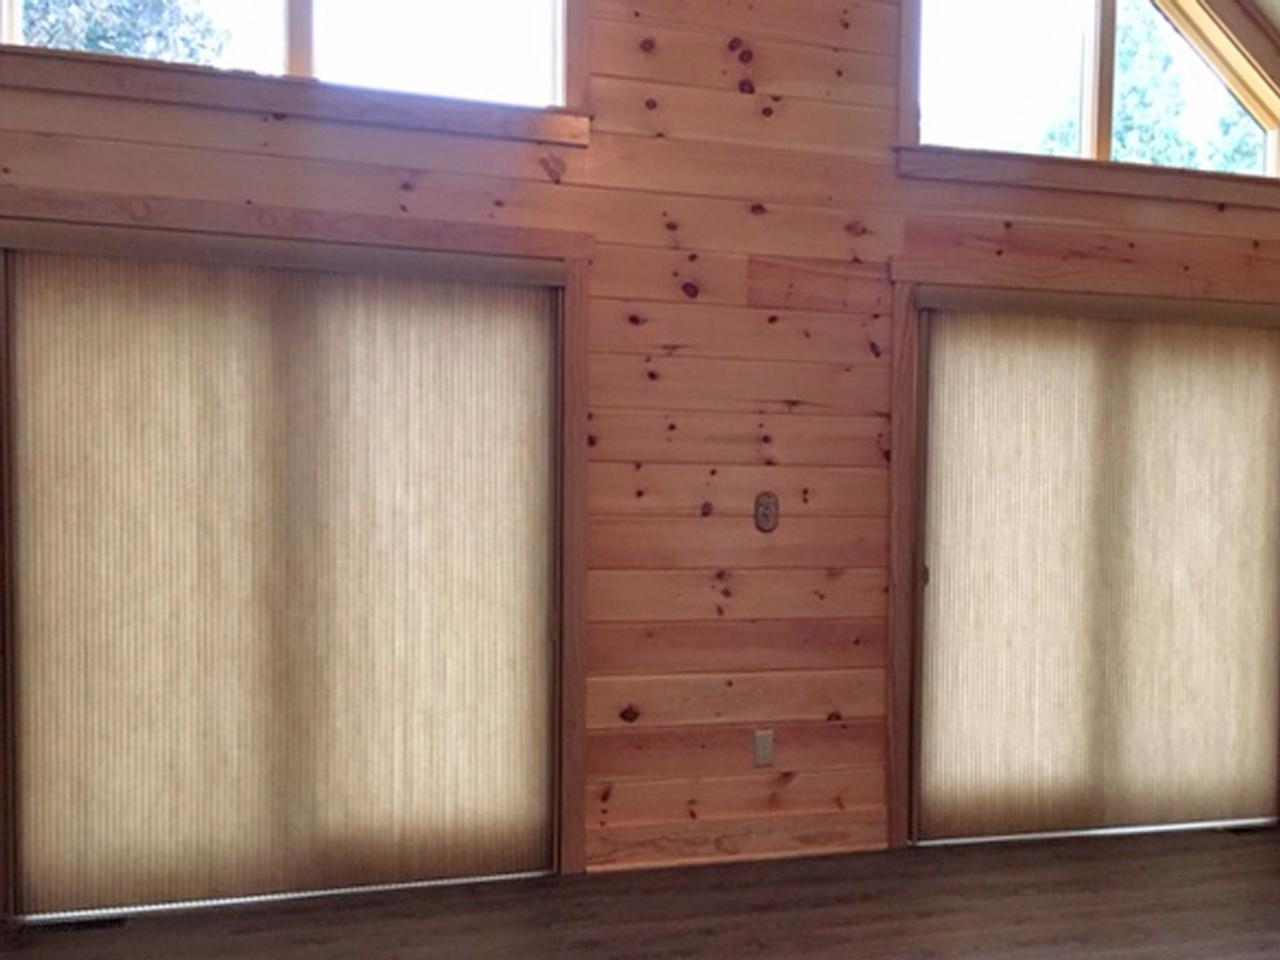 Woven wood shades on sliding glass doors